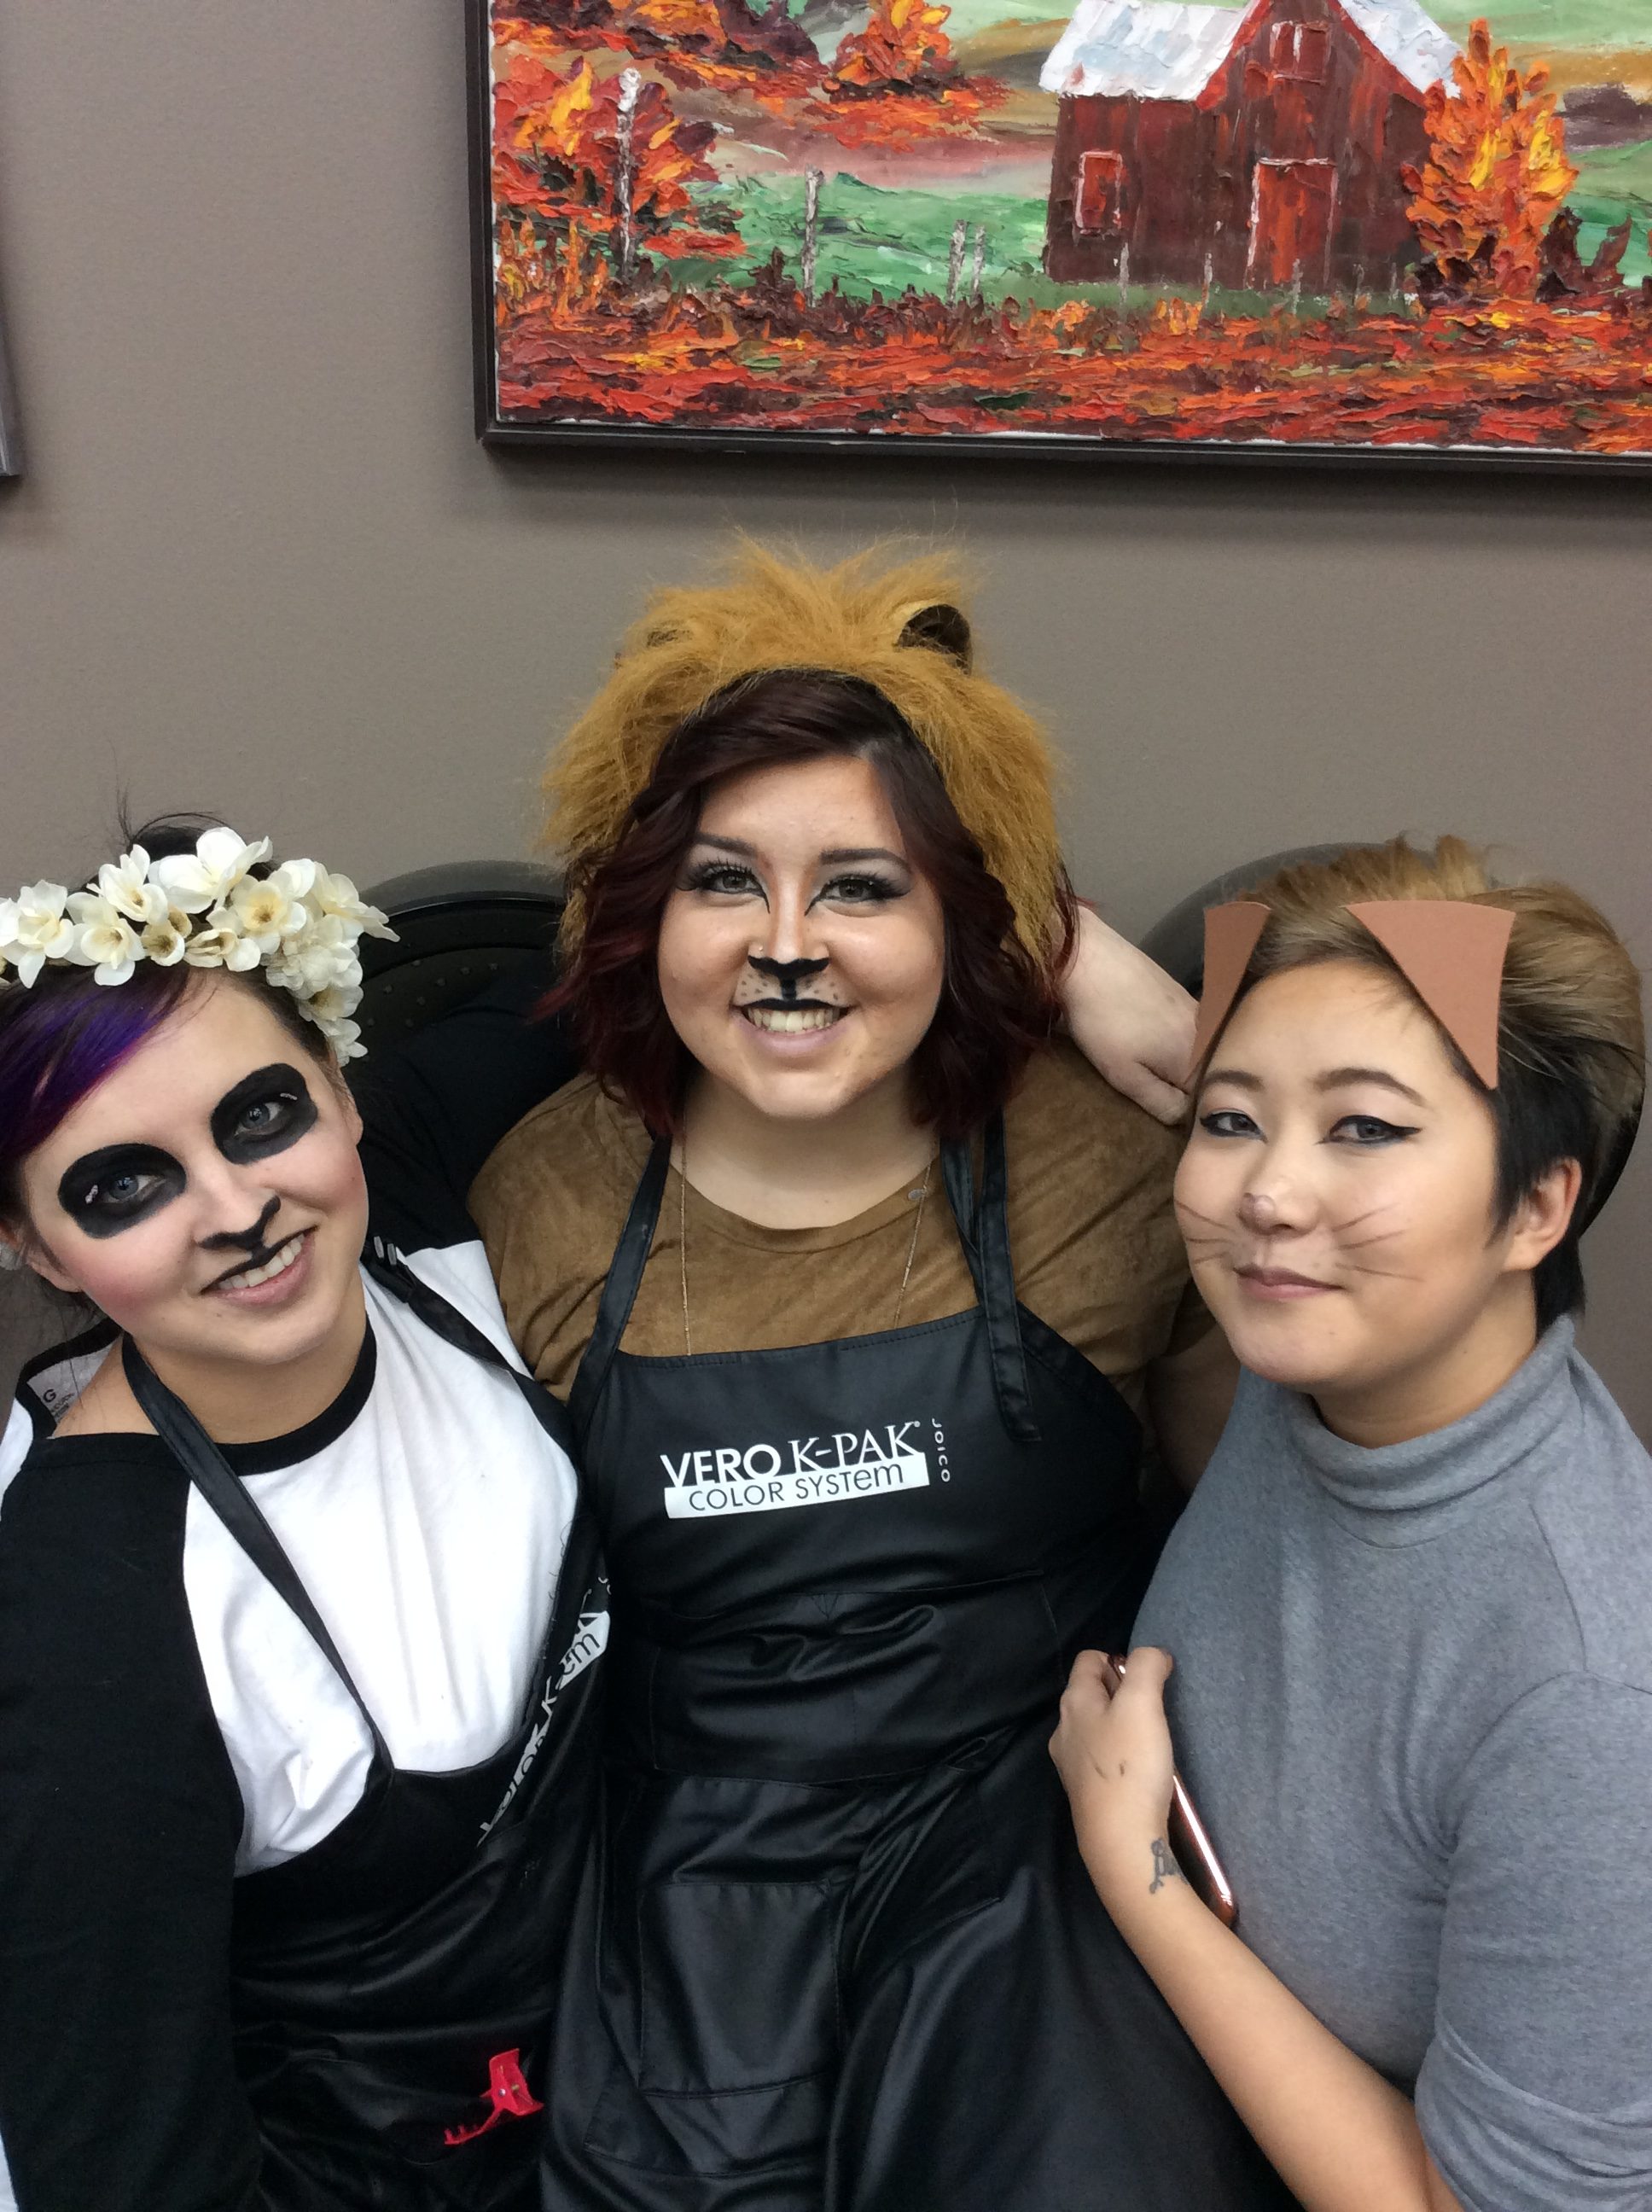 Hairstyle inn team in Halloween costumes